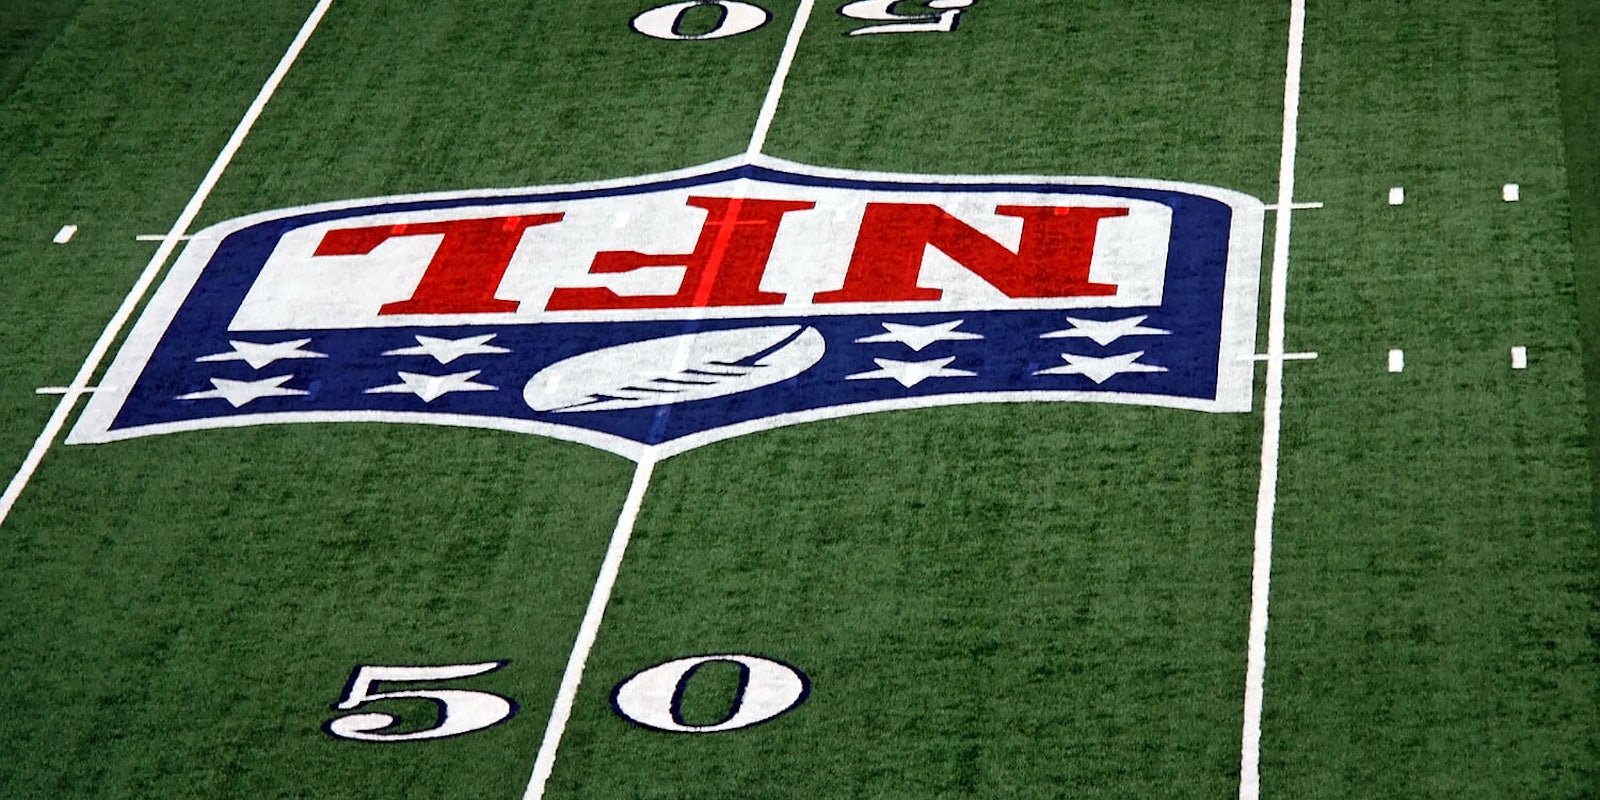 50 yard line with NFL logo